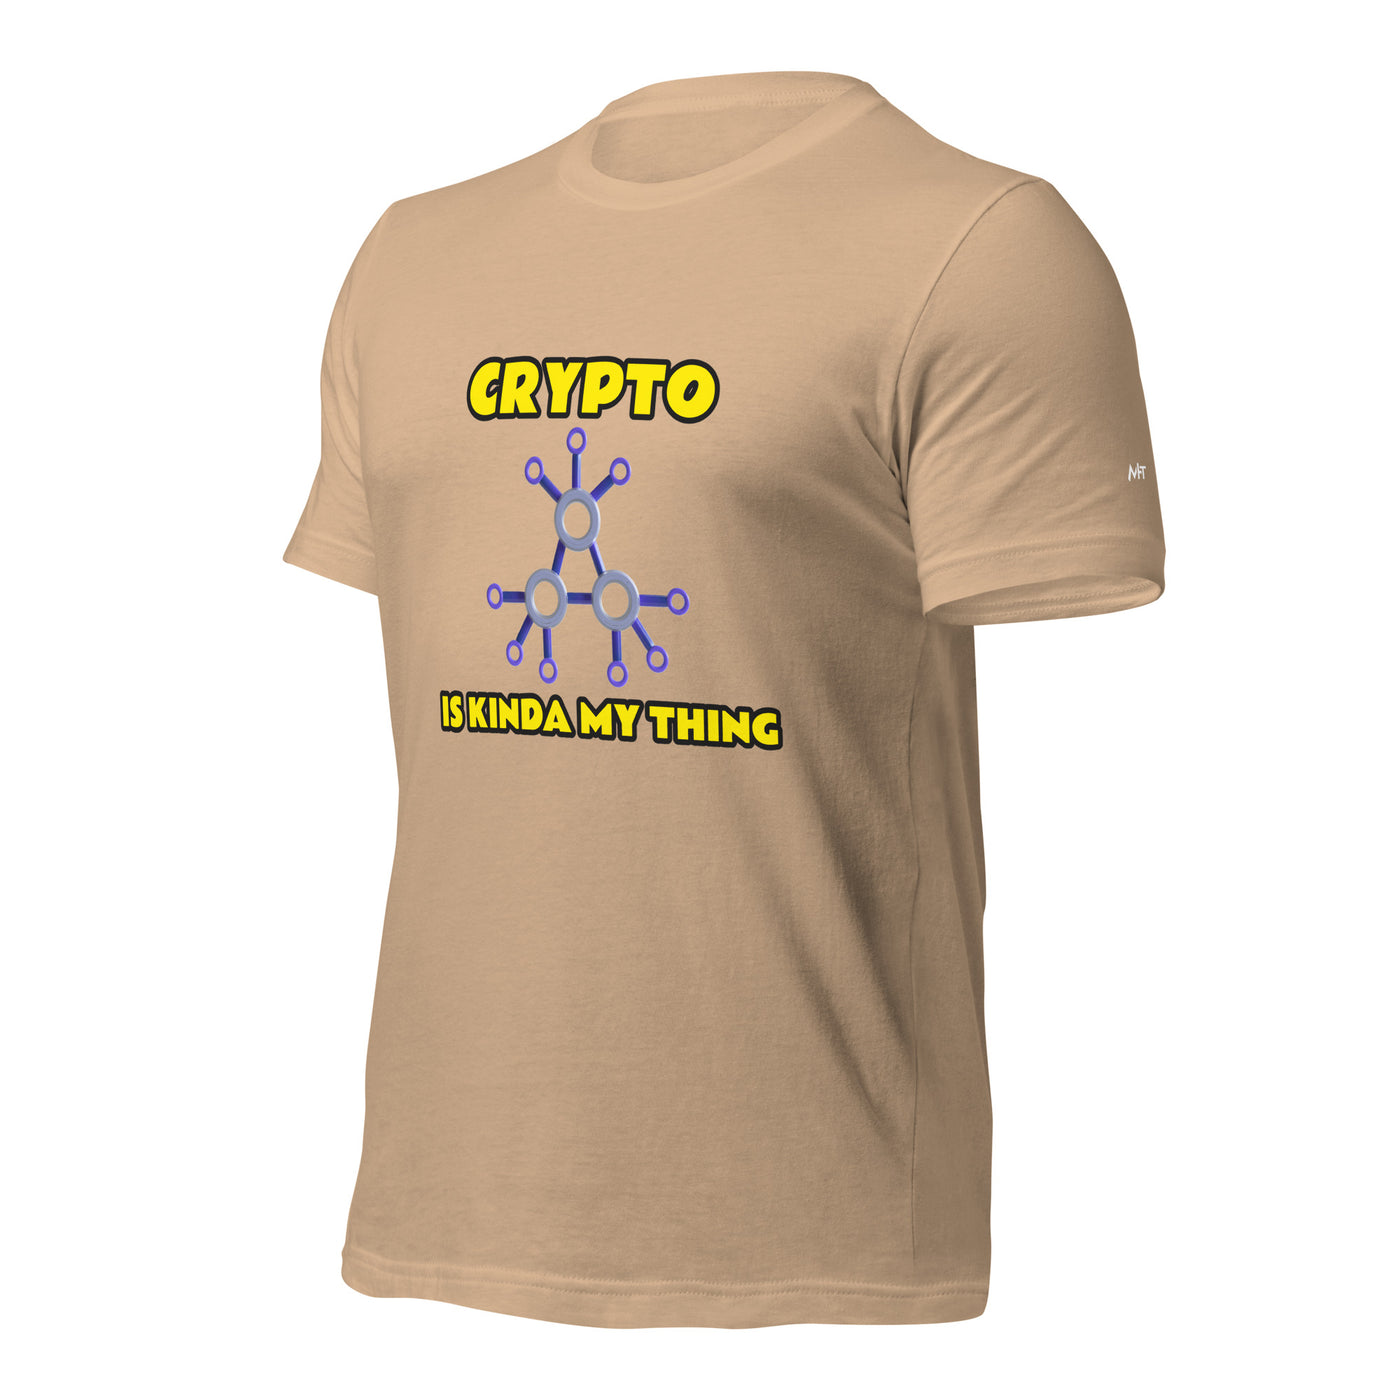 Crypto is Kinda My Thing V2 - Unisex t-shirt